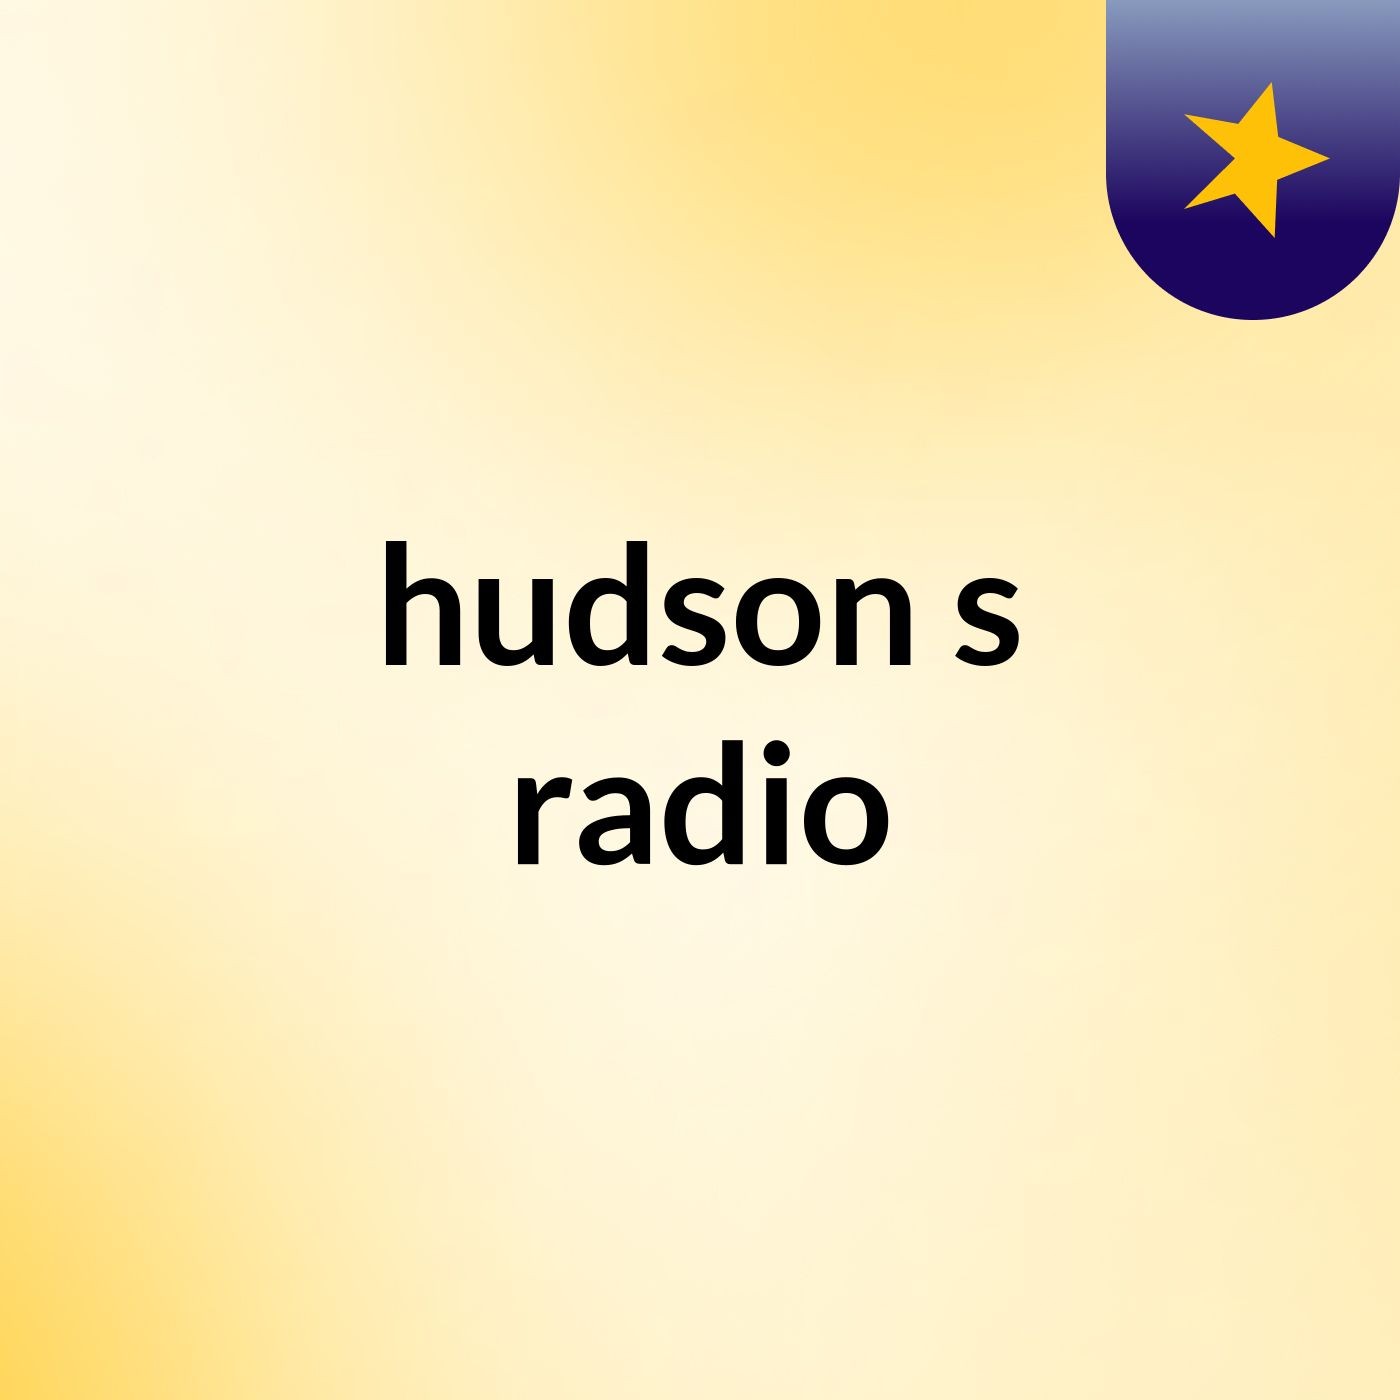 hudson's radio